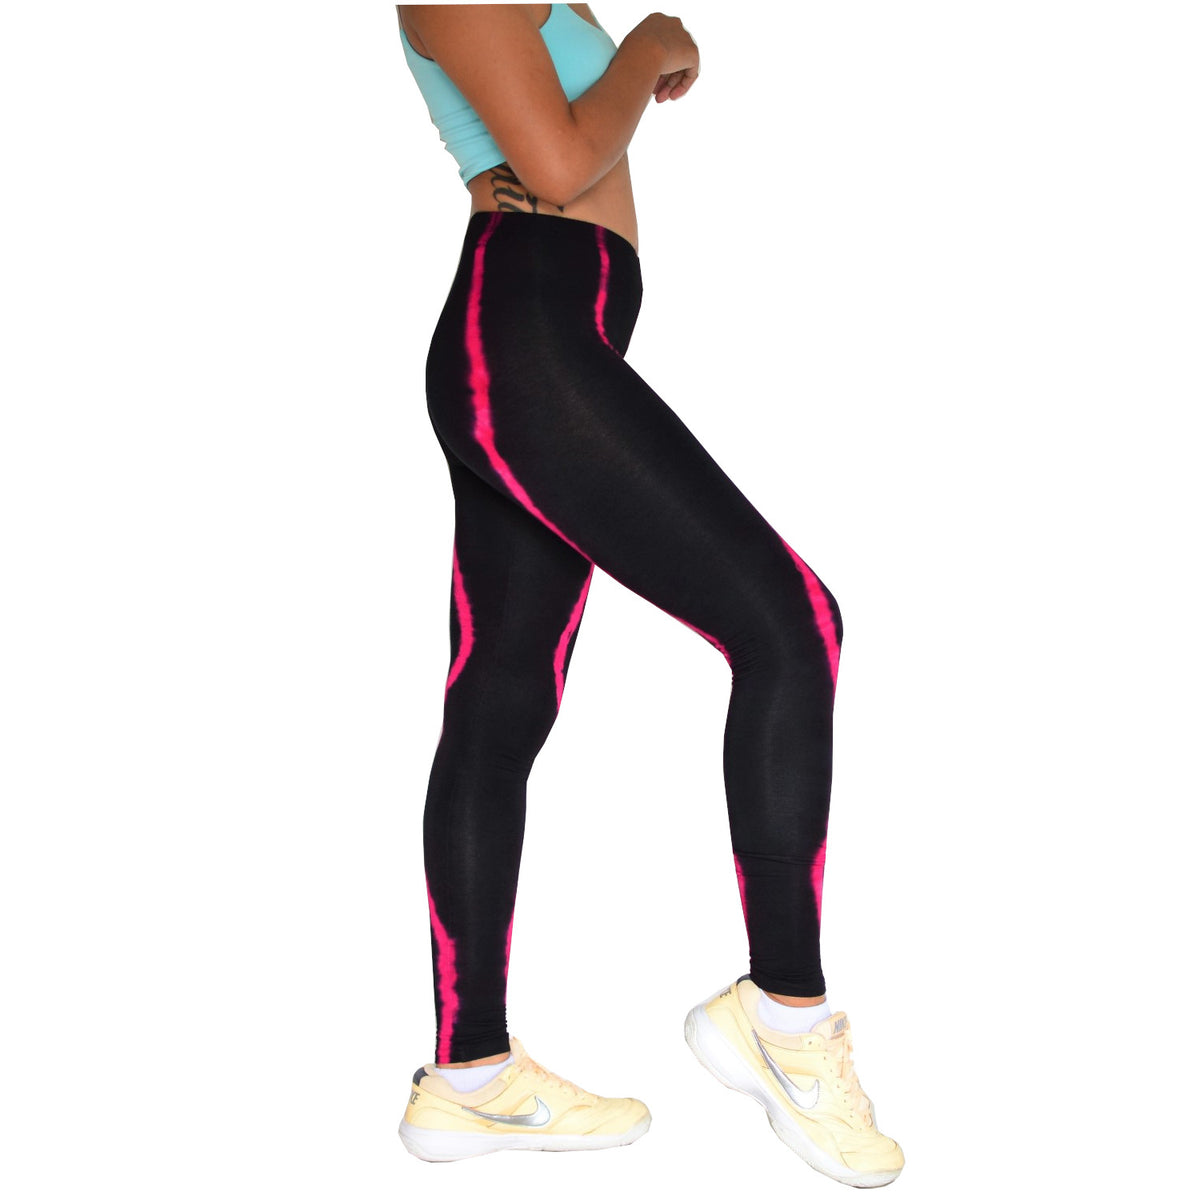 Tangerine Womens Stretch Activewear Pants Black w/Pink Piping Sz XXL 